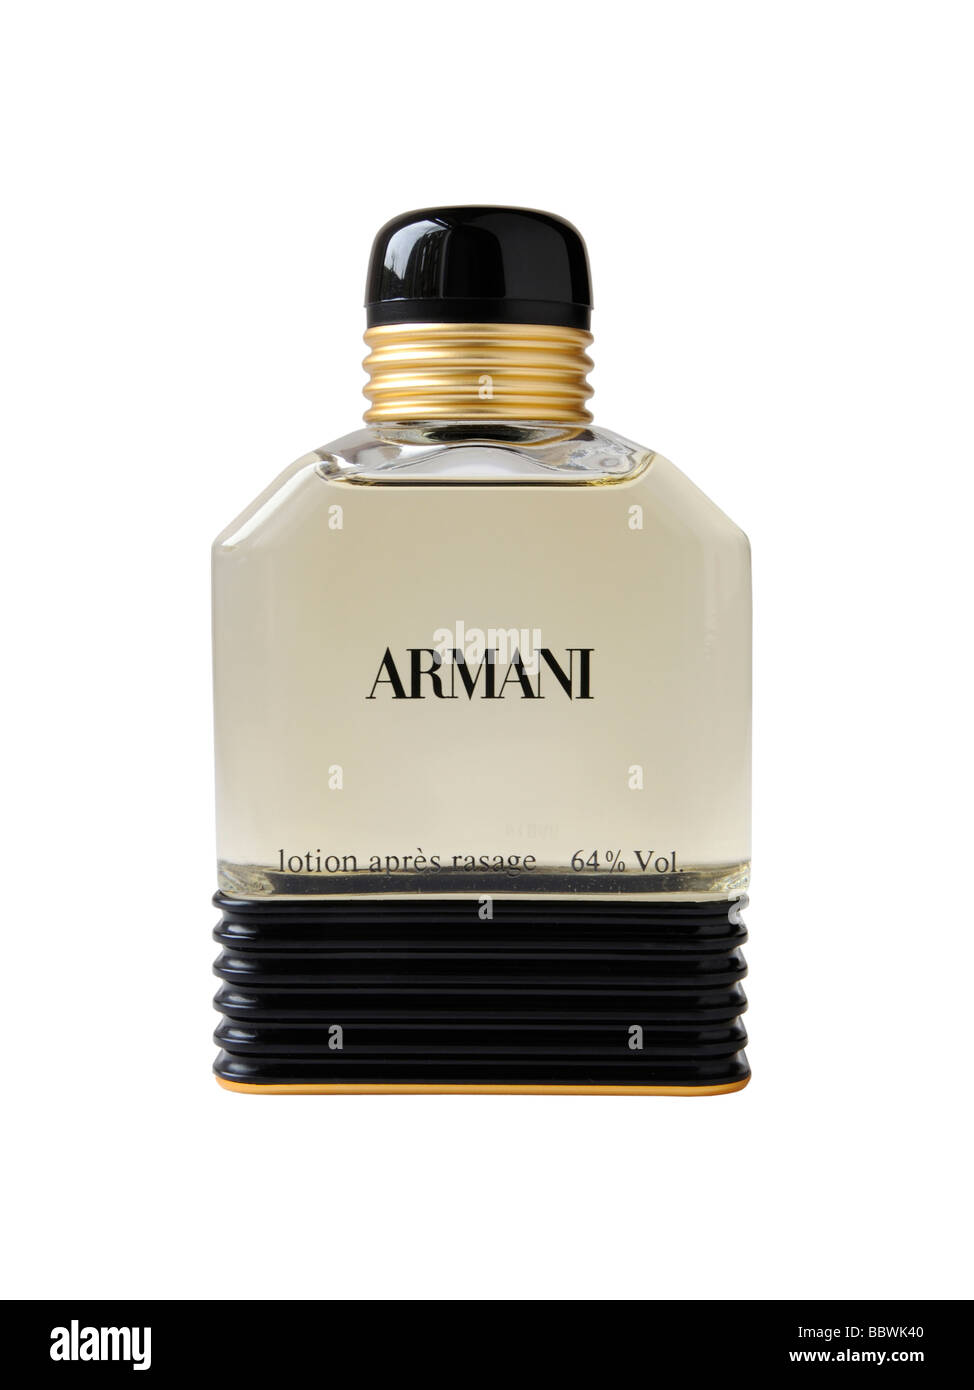 armani aftershave sale